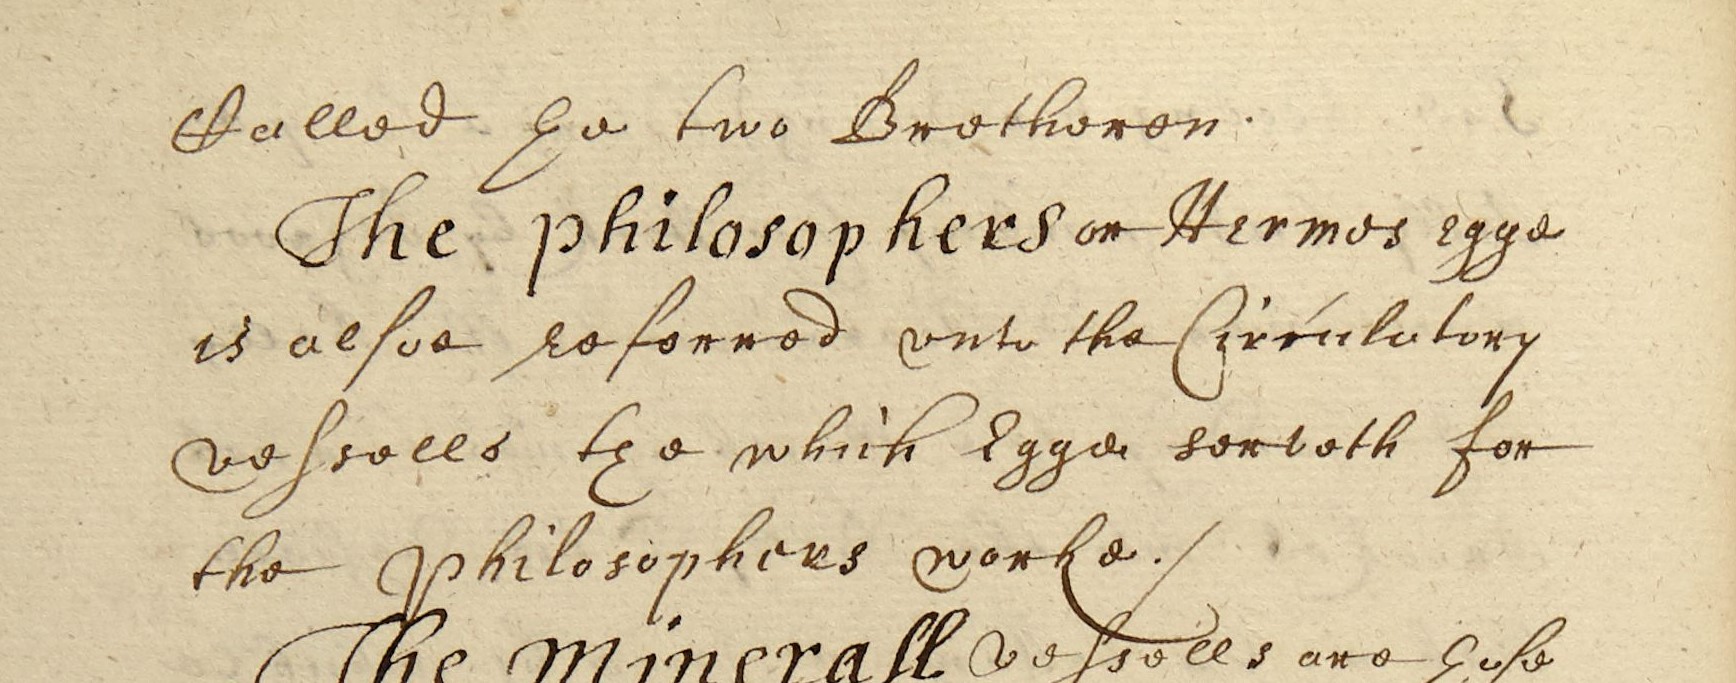 Handwritten recipe mentioning a Philosophers’ egg.